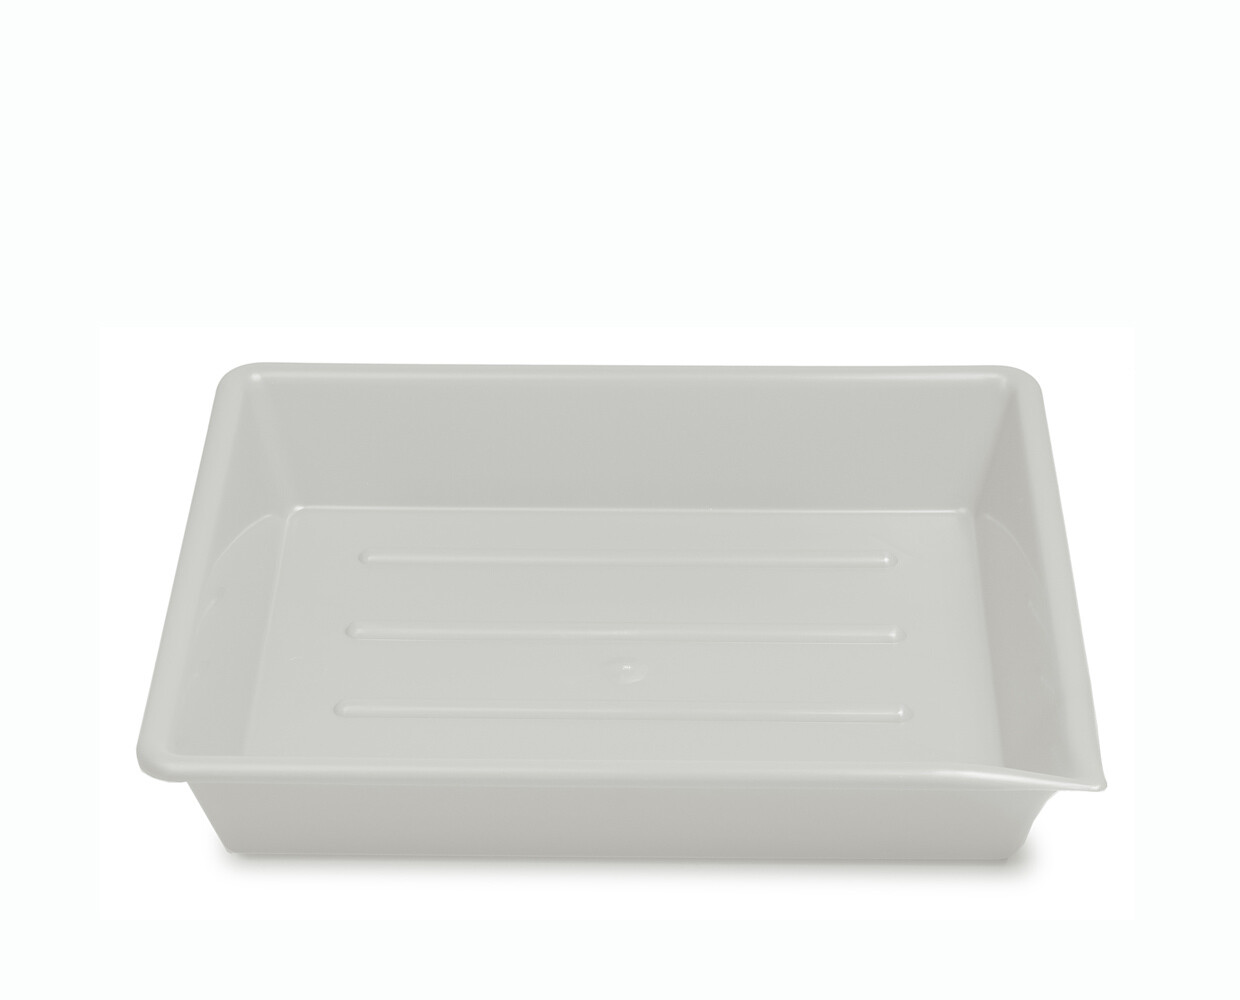 Kaiser lab trays 8x10" (20x25cm) white